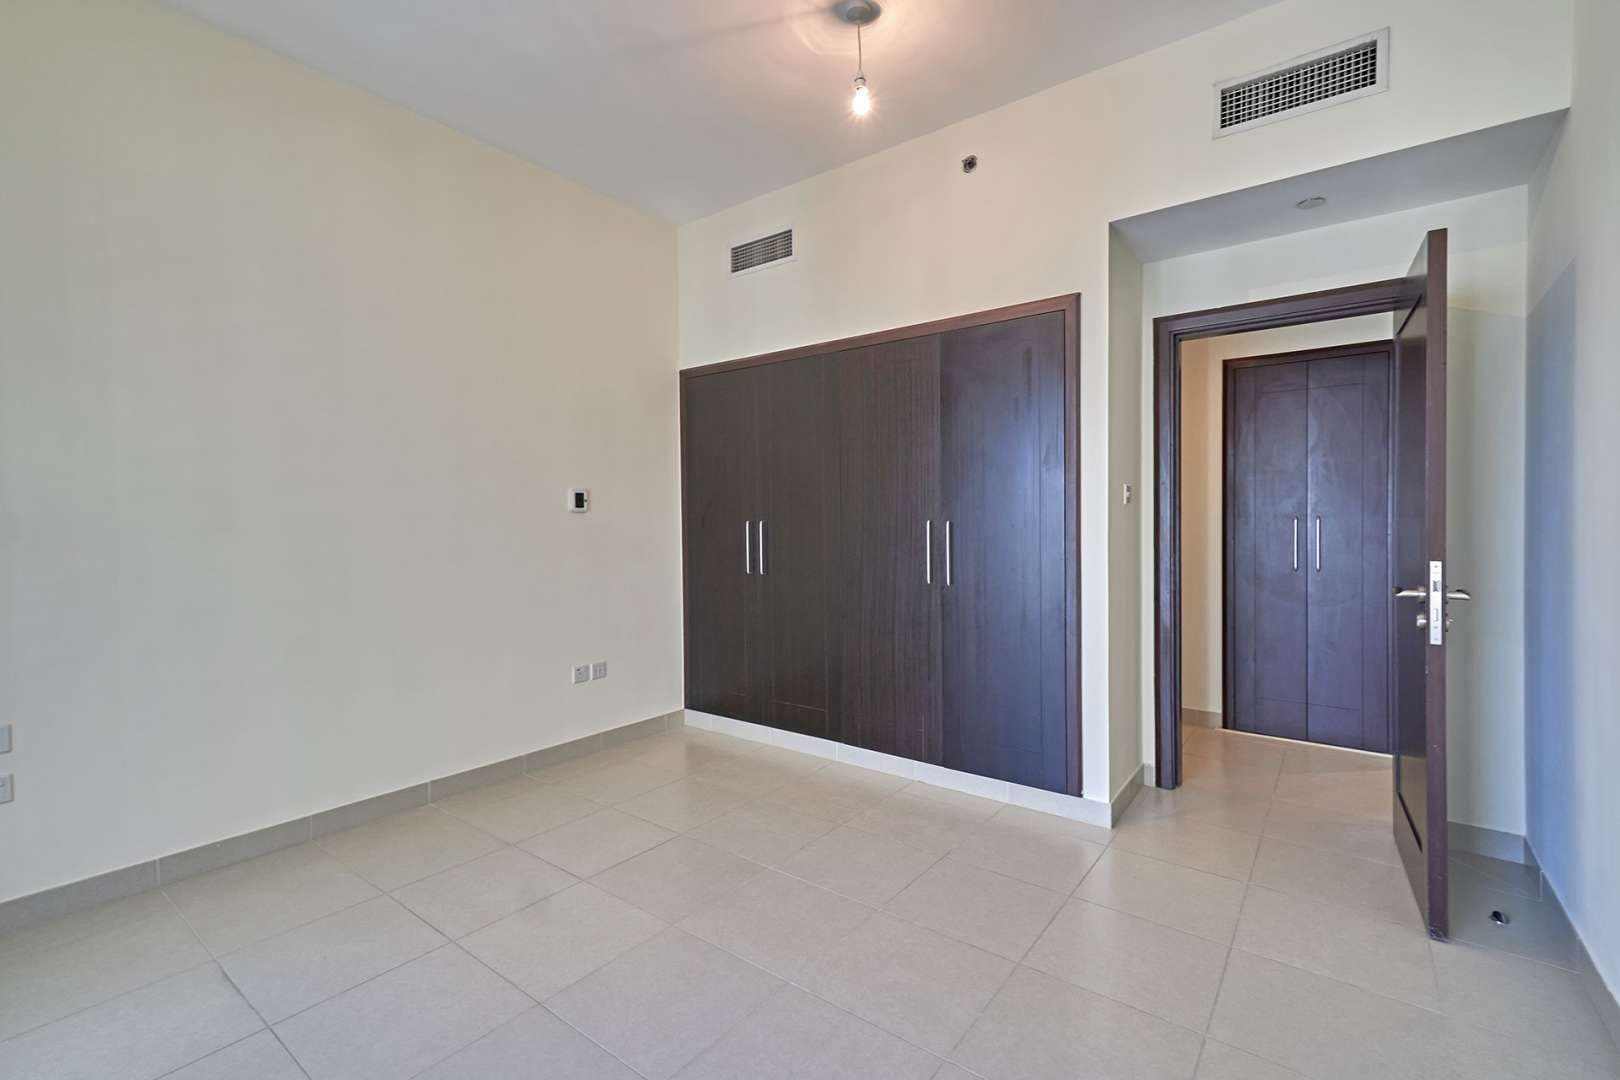 2 Bedroom Apartment For Sale Mosela Lp07610 A27d7c534f11700.jpg